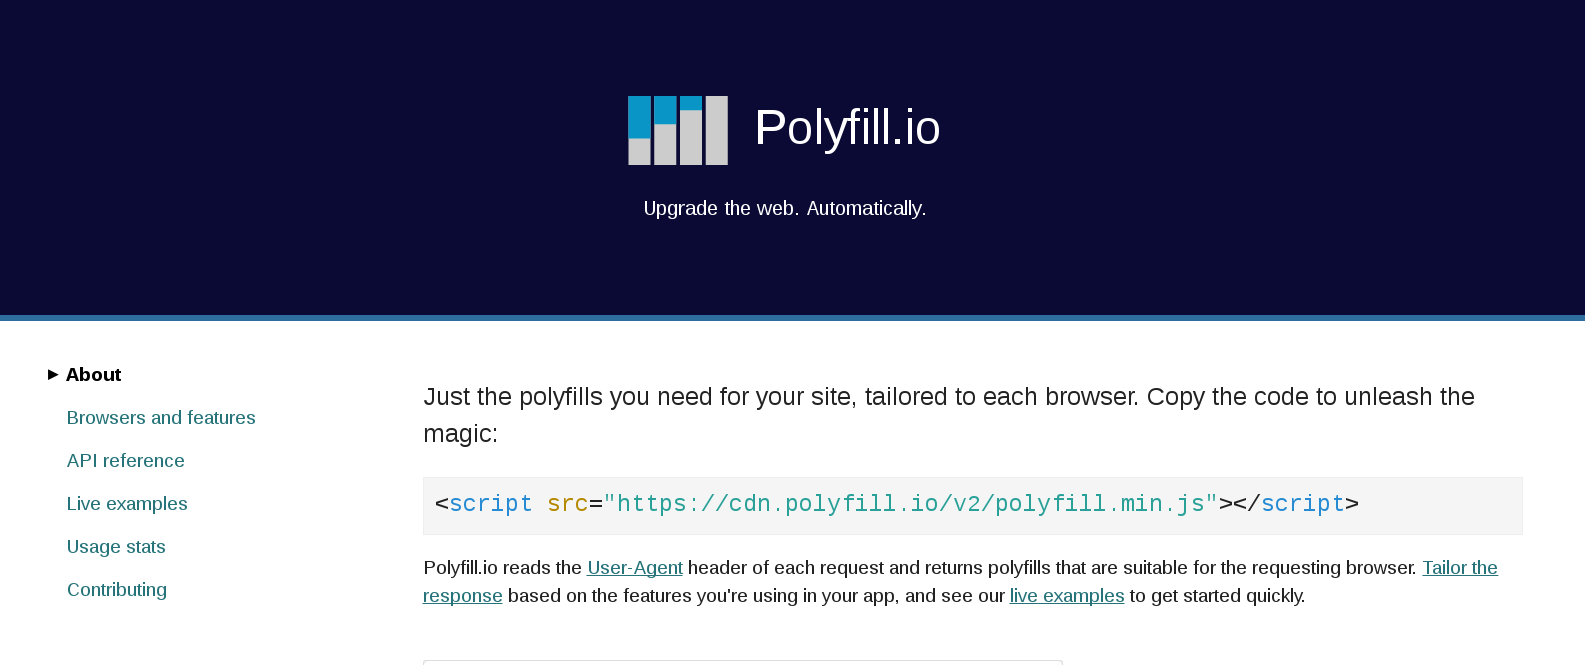 Polyfill.io screenshot.